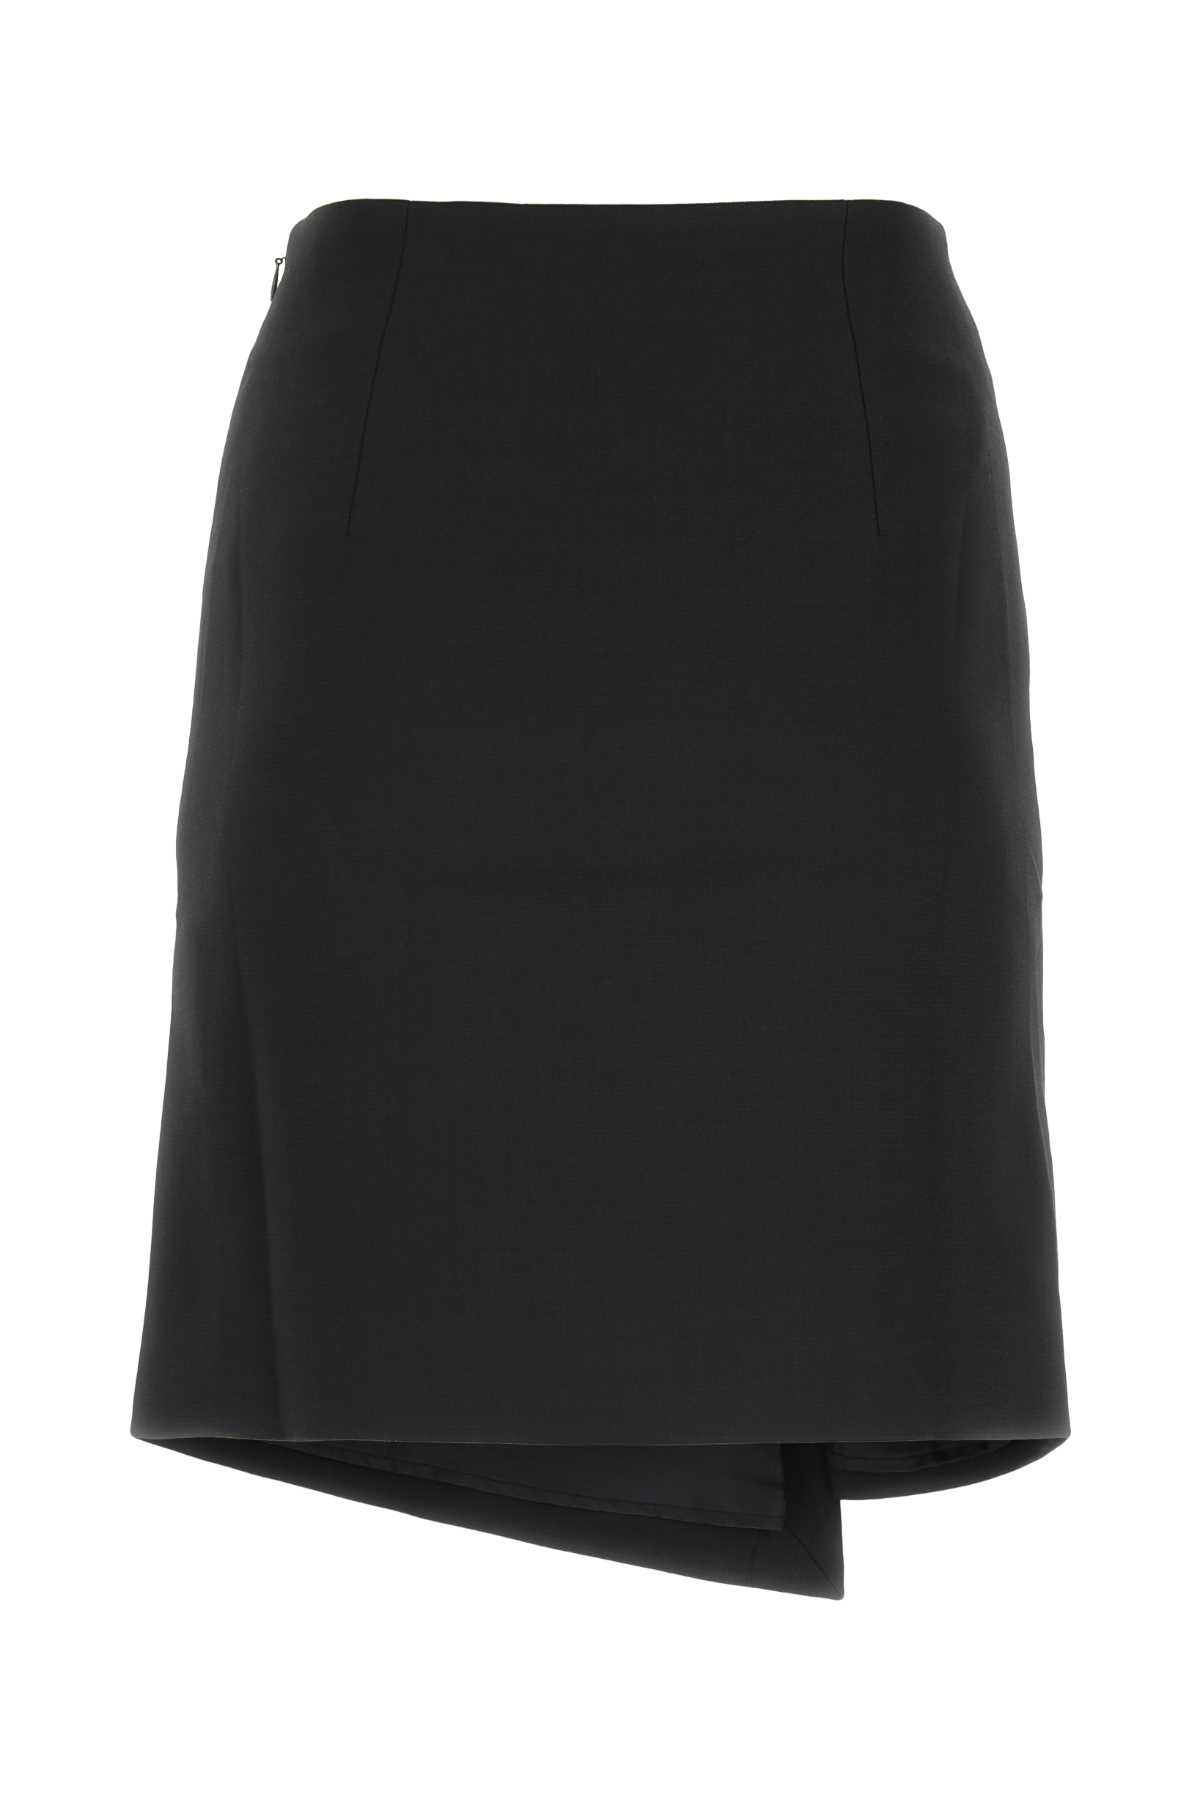 Shop Remain Birger Christensen Black Stretch Polyester Blend Skirt